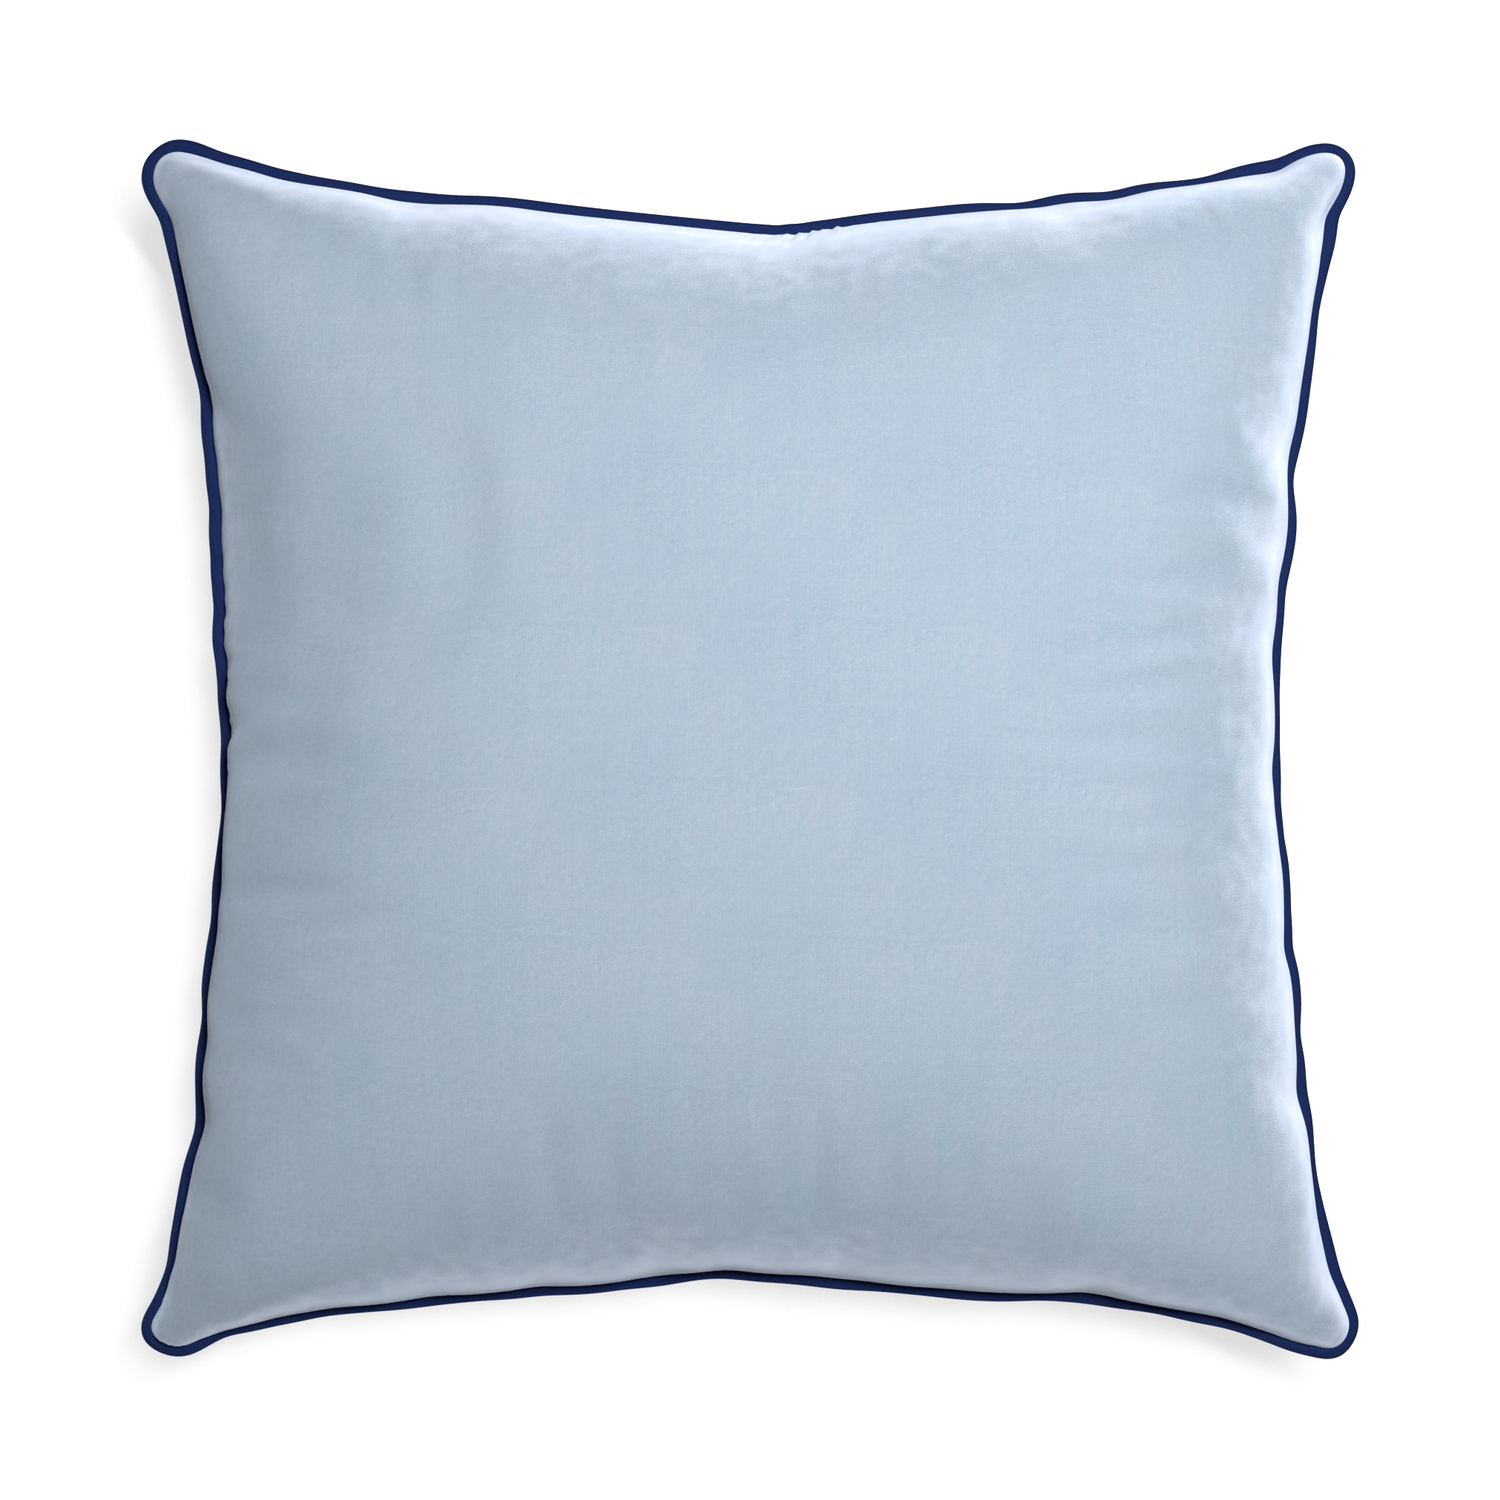 square light blue velvet pillow with navy blue piping